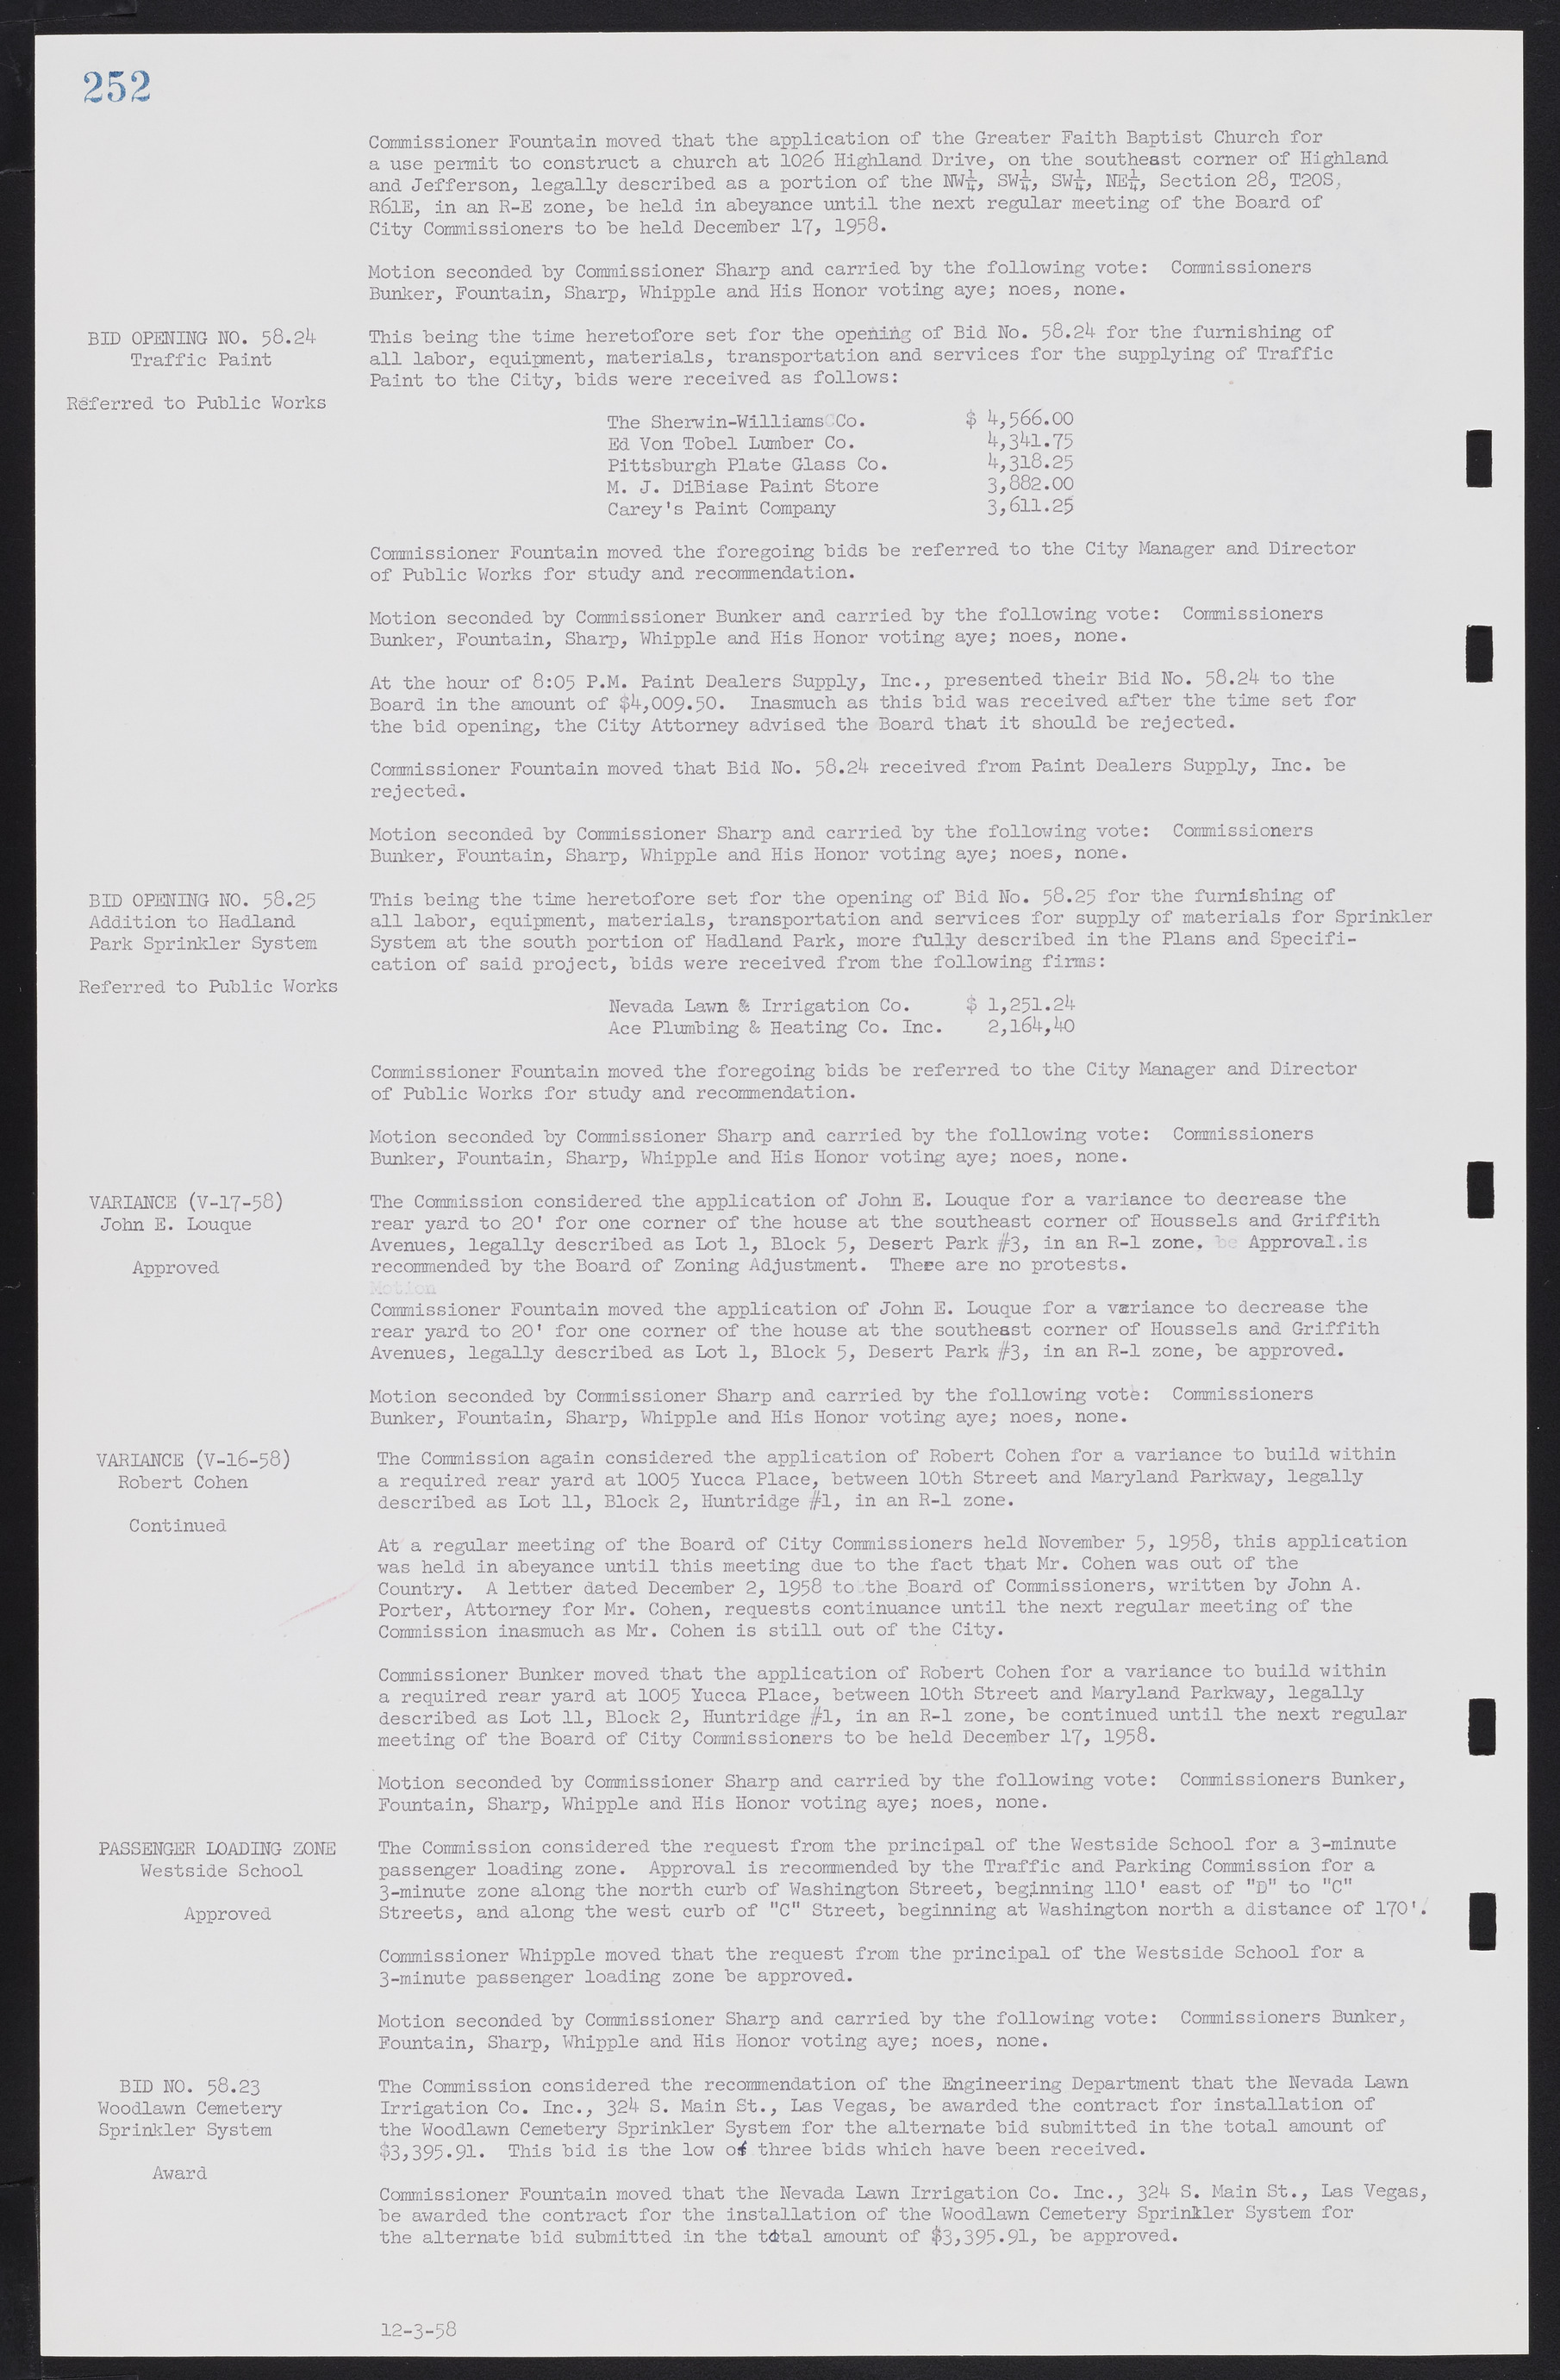 Las Vegas City Commission Minutes, November 20, 1957 to December 2, 1959, lvc000011-260